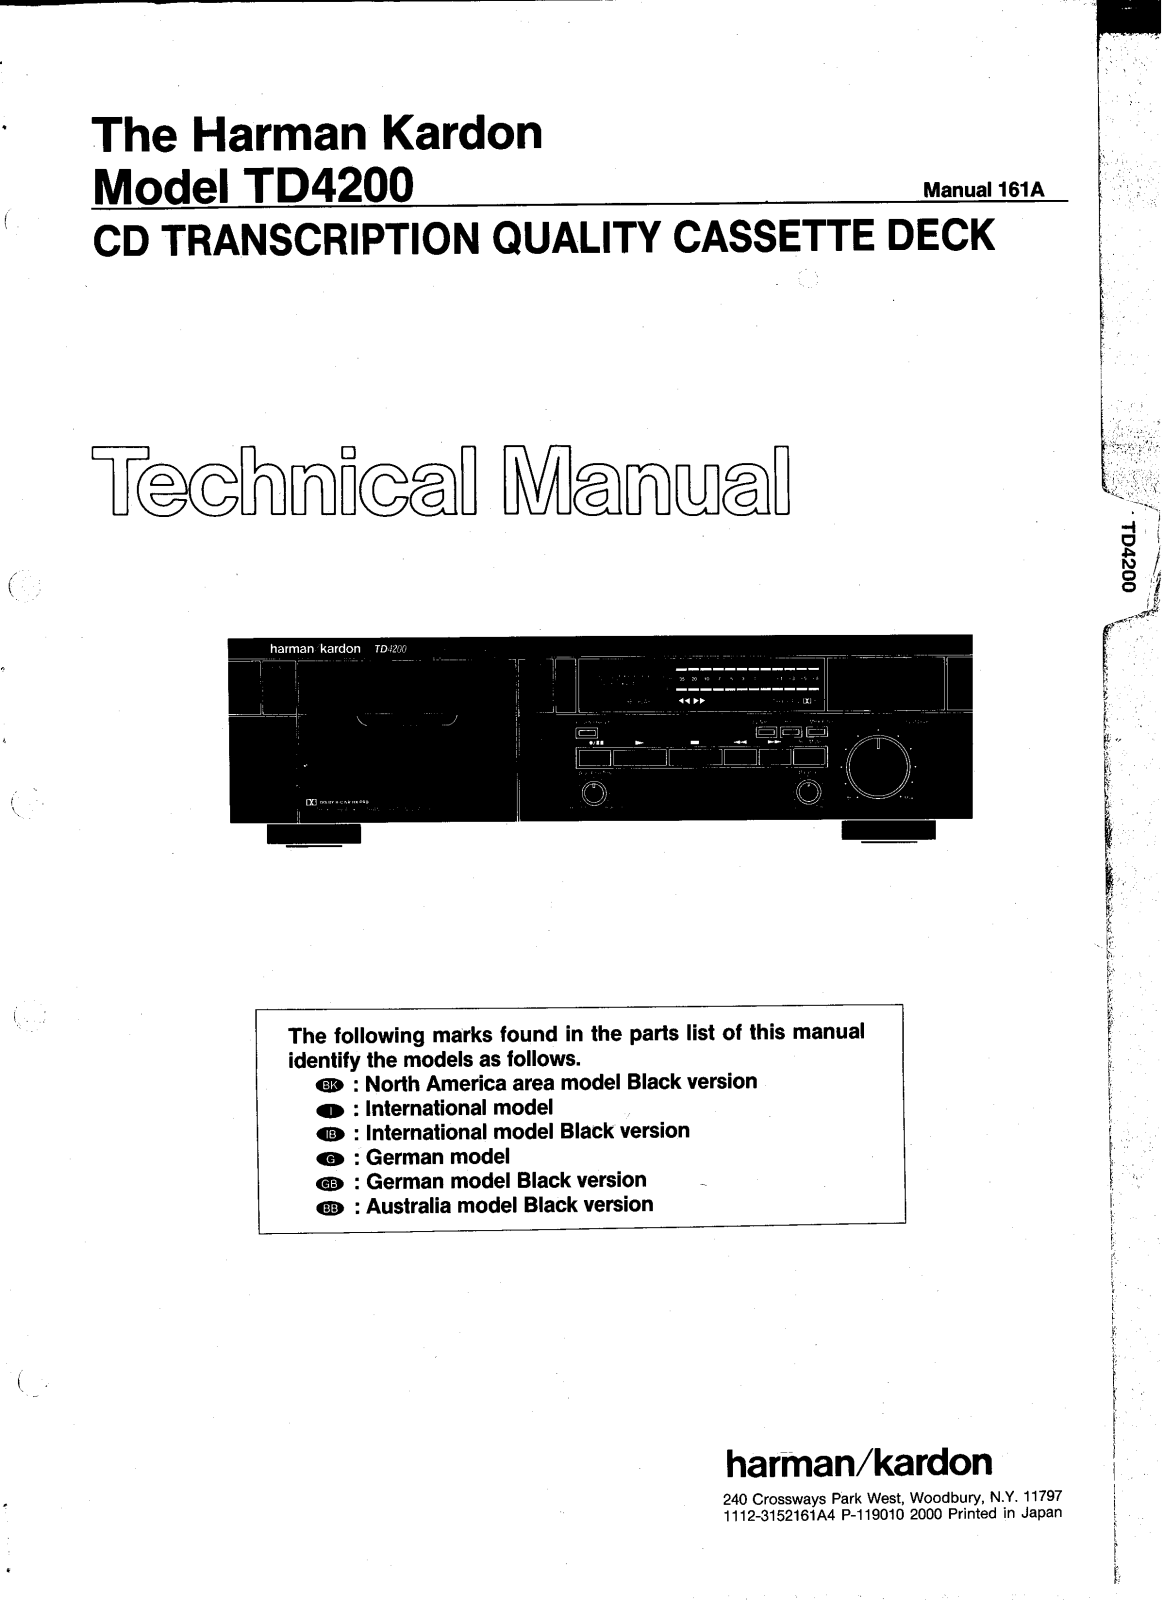 Harman Kardon TD-4200 Service manual